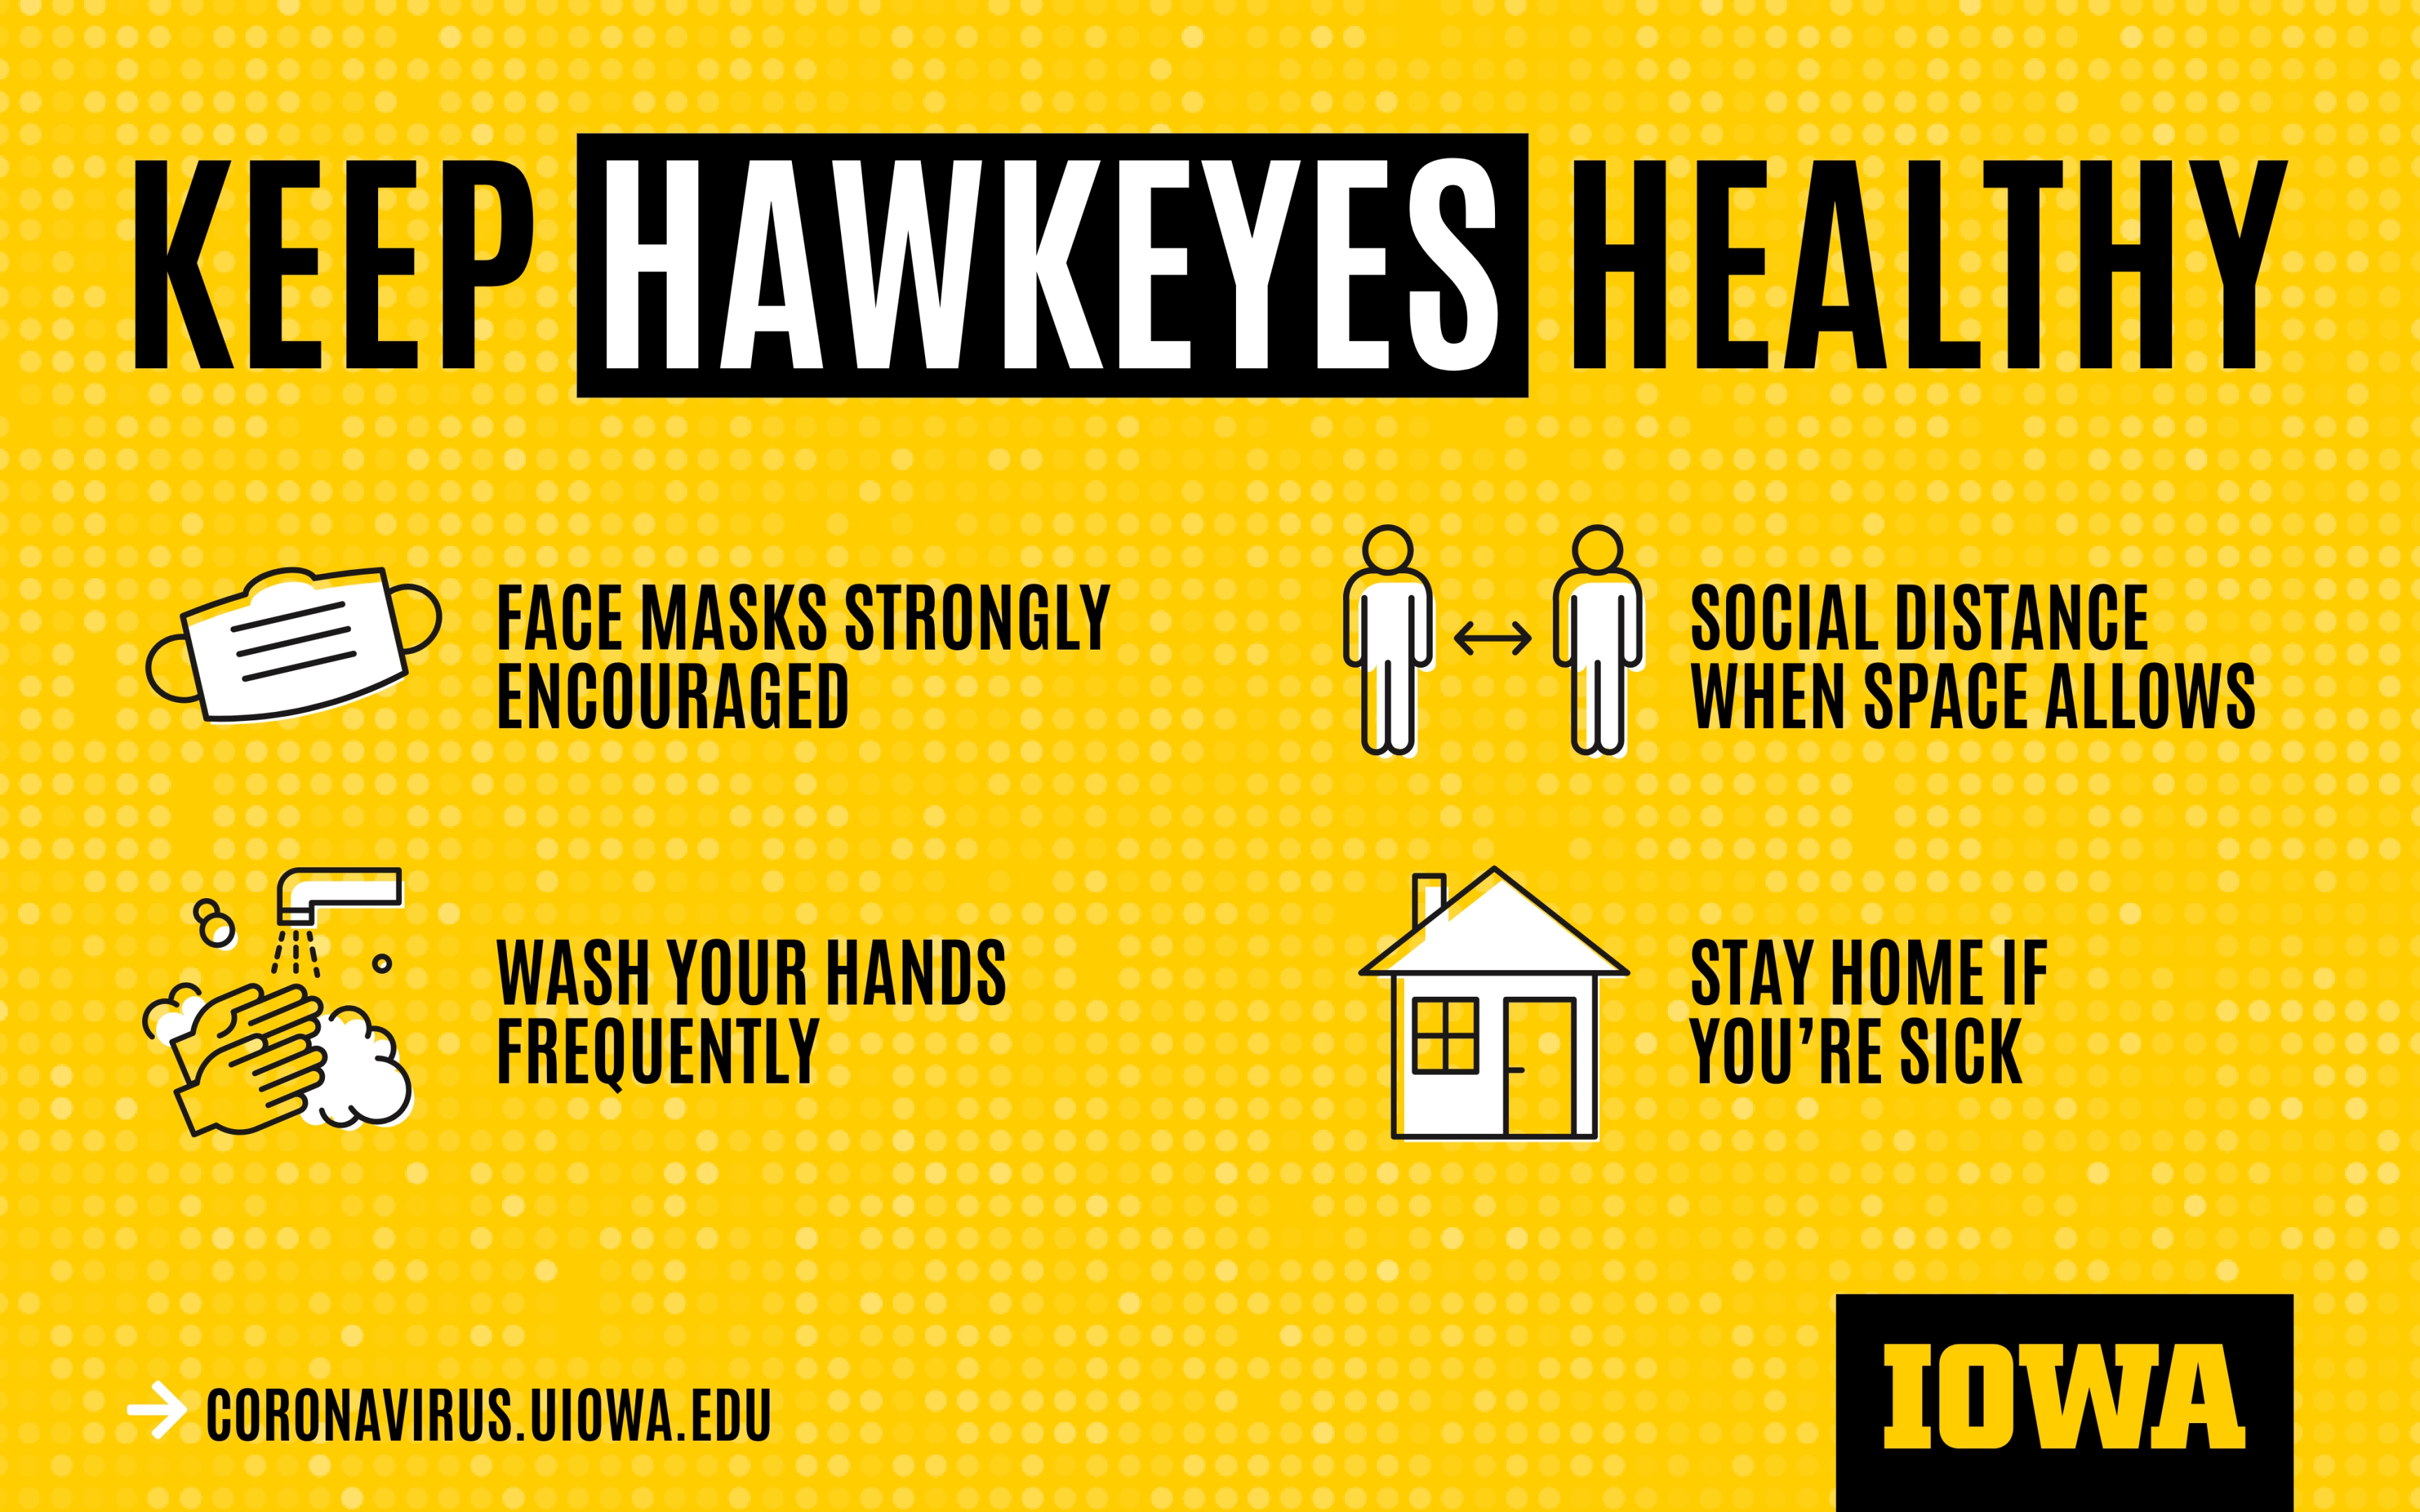 Keep hawkeyes healthy with COVID health tips